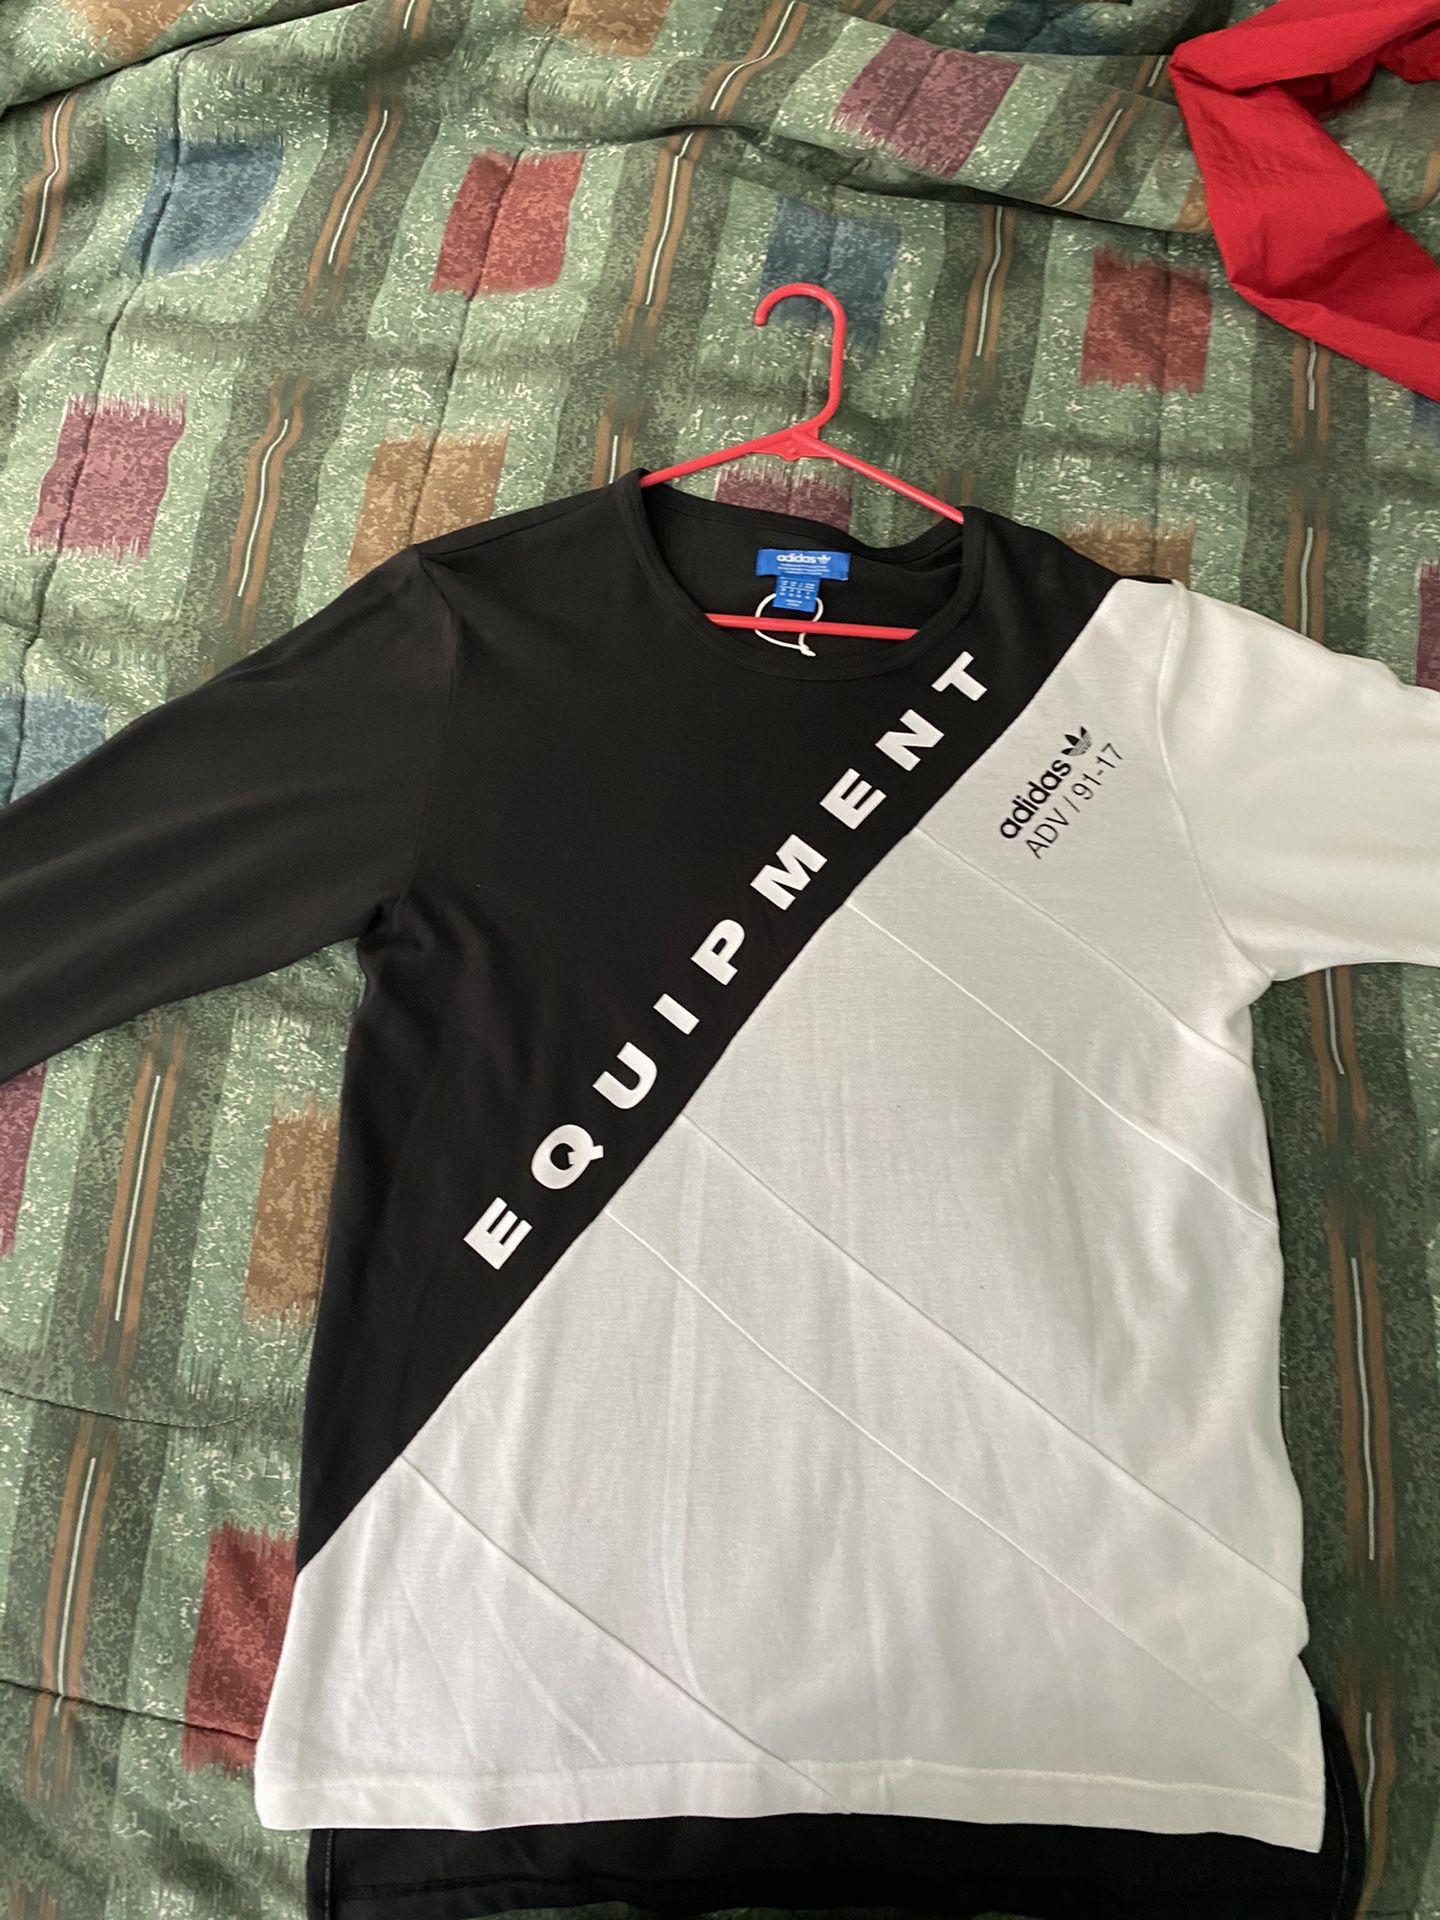 Adidas “Equipment” Long Sleeve Shirt